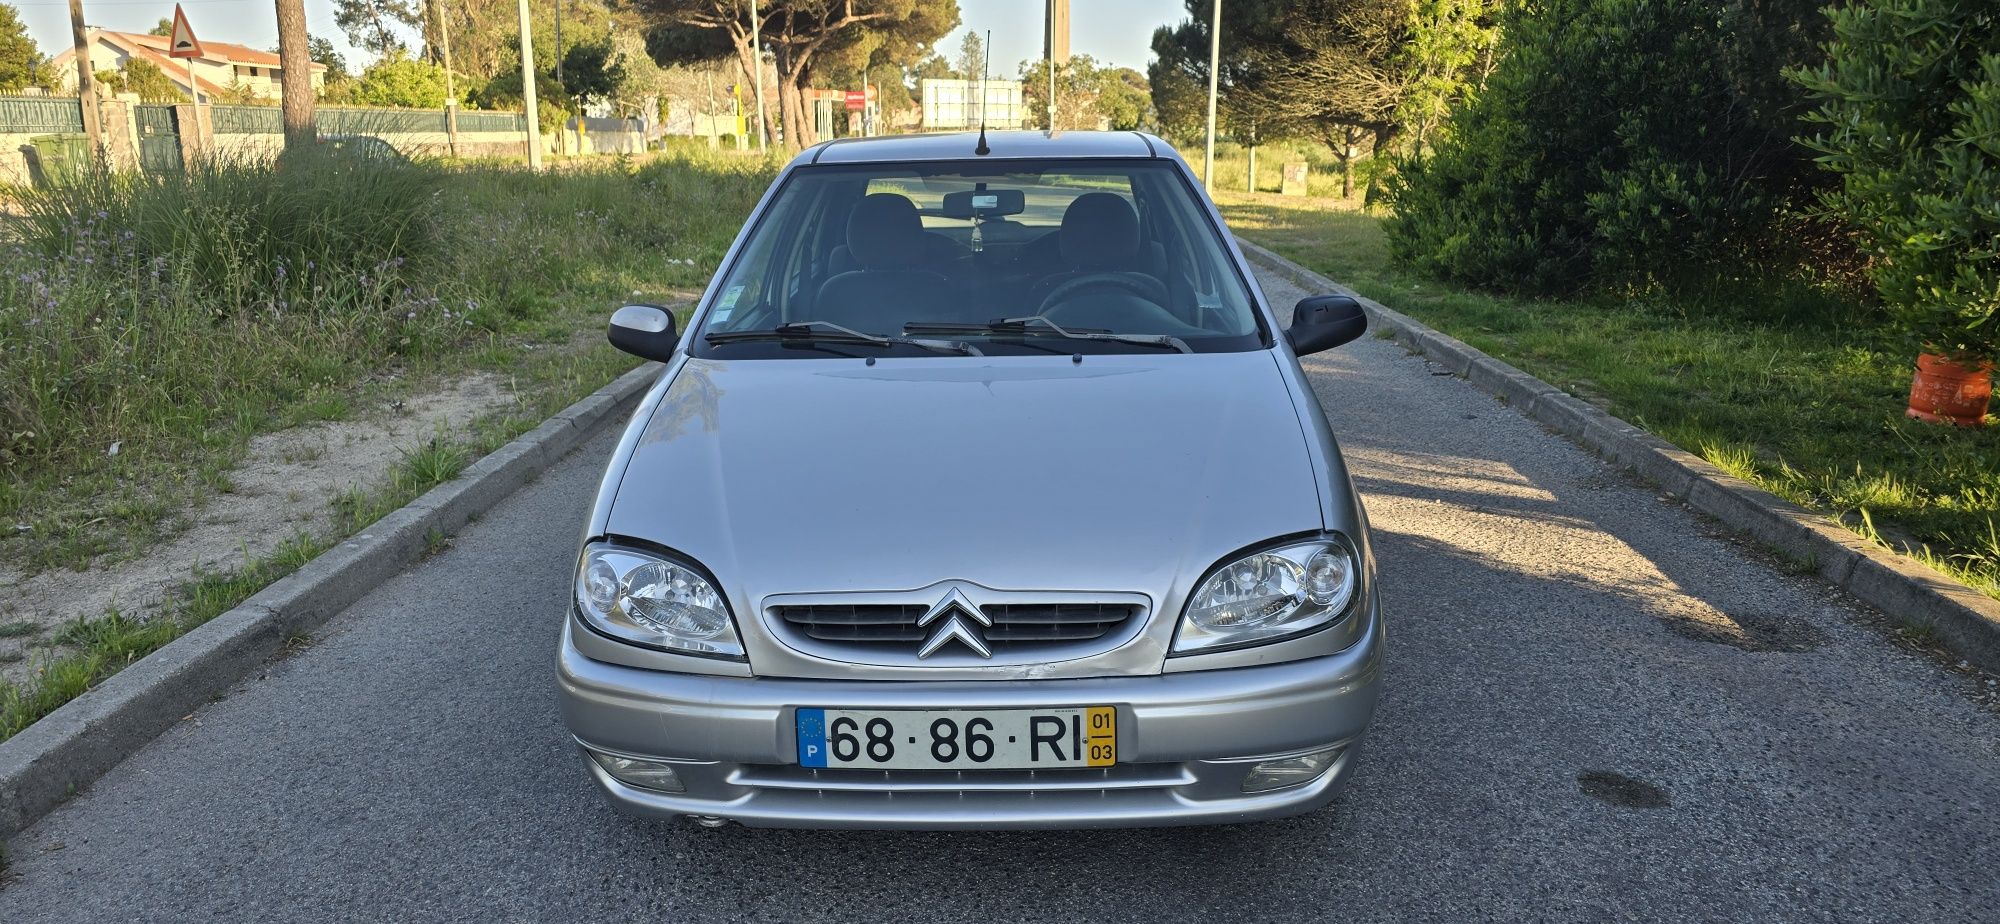 Citroën Saxo 2001